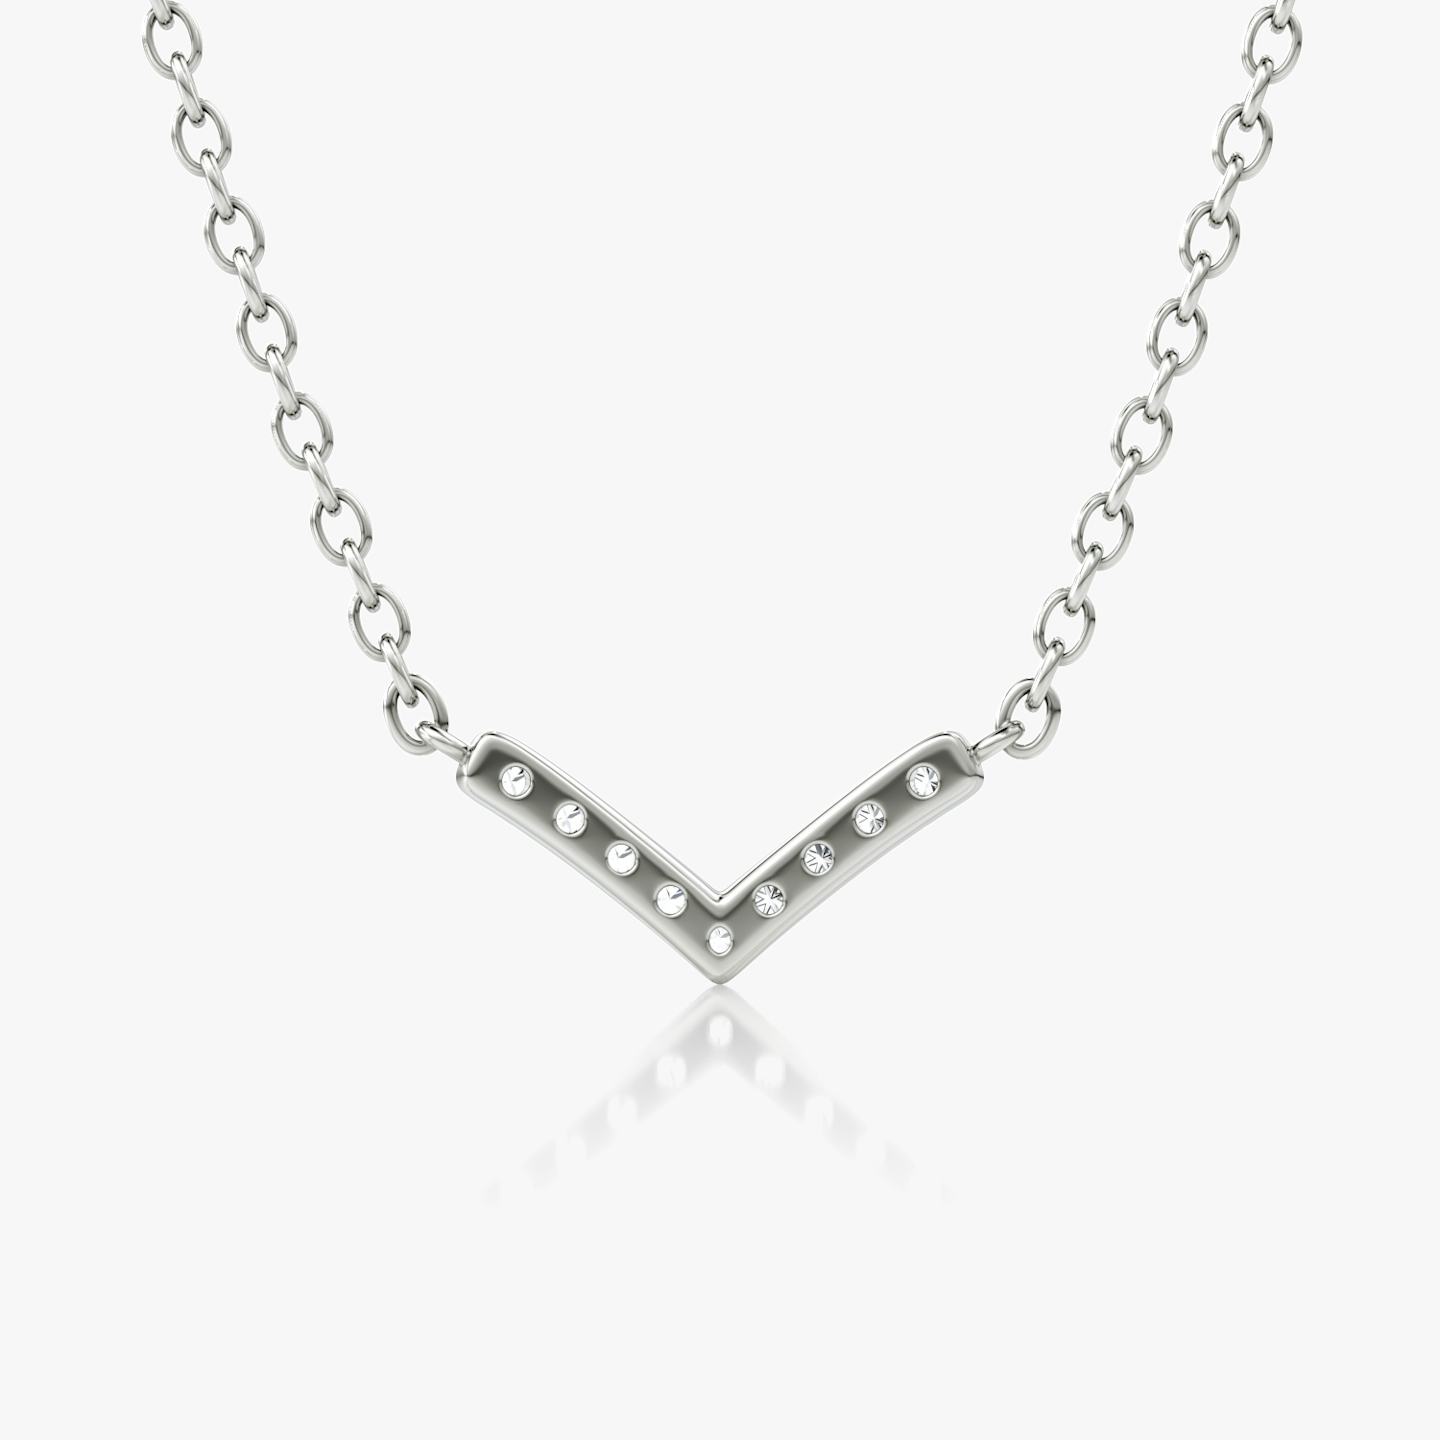 Petite V Necklace | Round Brilliant | 14k | 18k White Gold | Chain length: 16-18